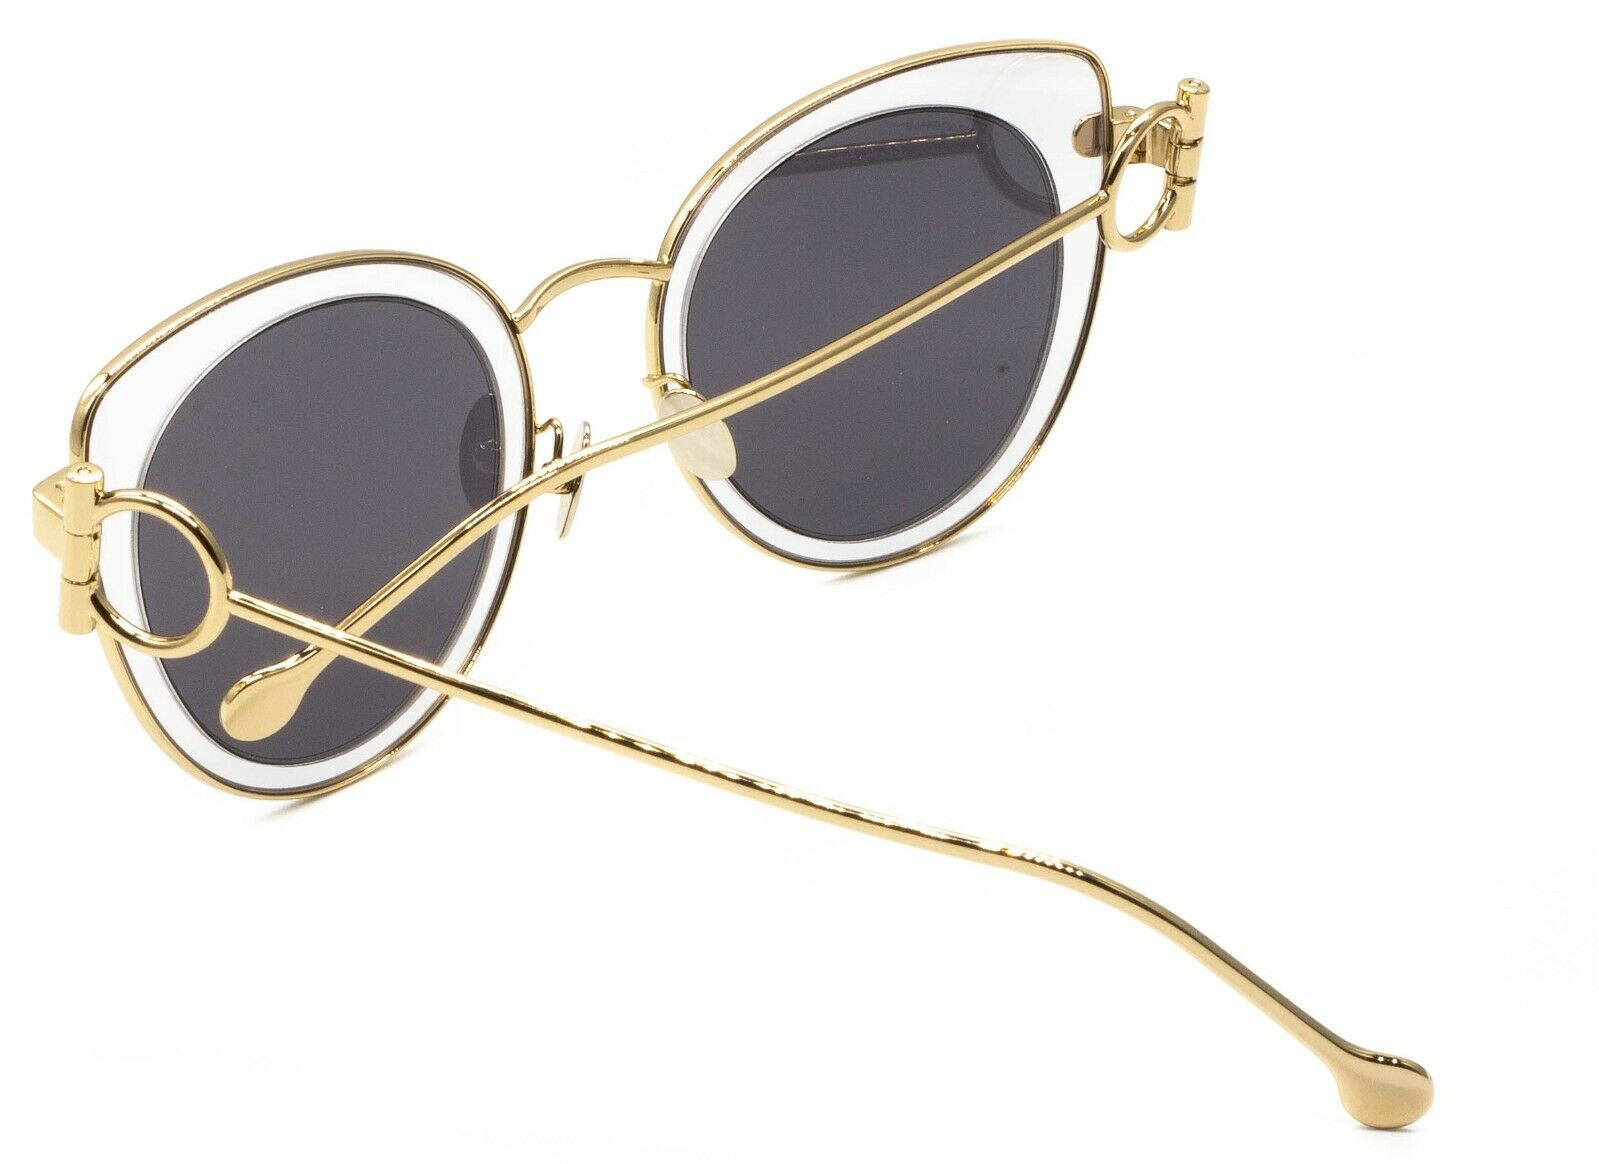 Salvatore Ferragamo SF182S 043 #3 50mm Sunglasses Shades Eyewear BNIB - Italy